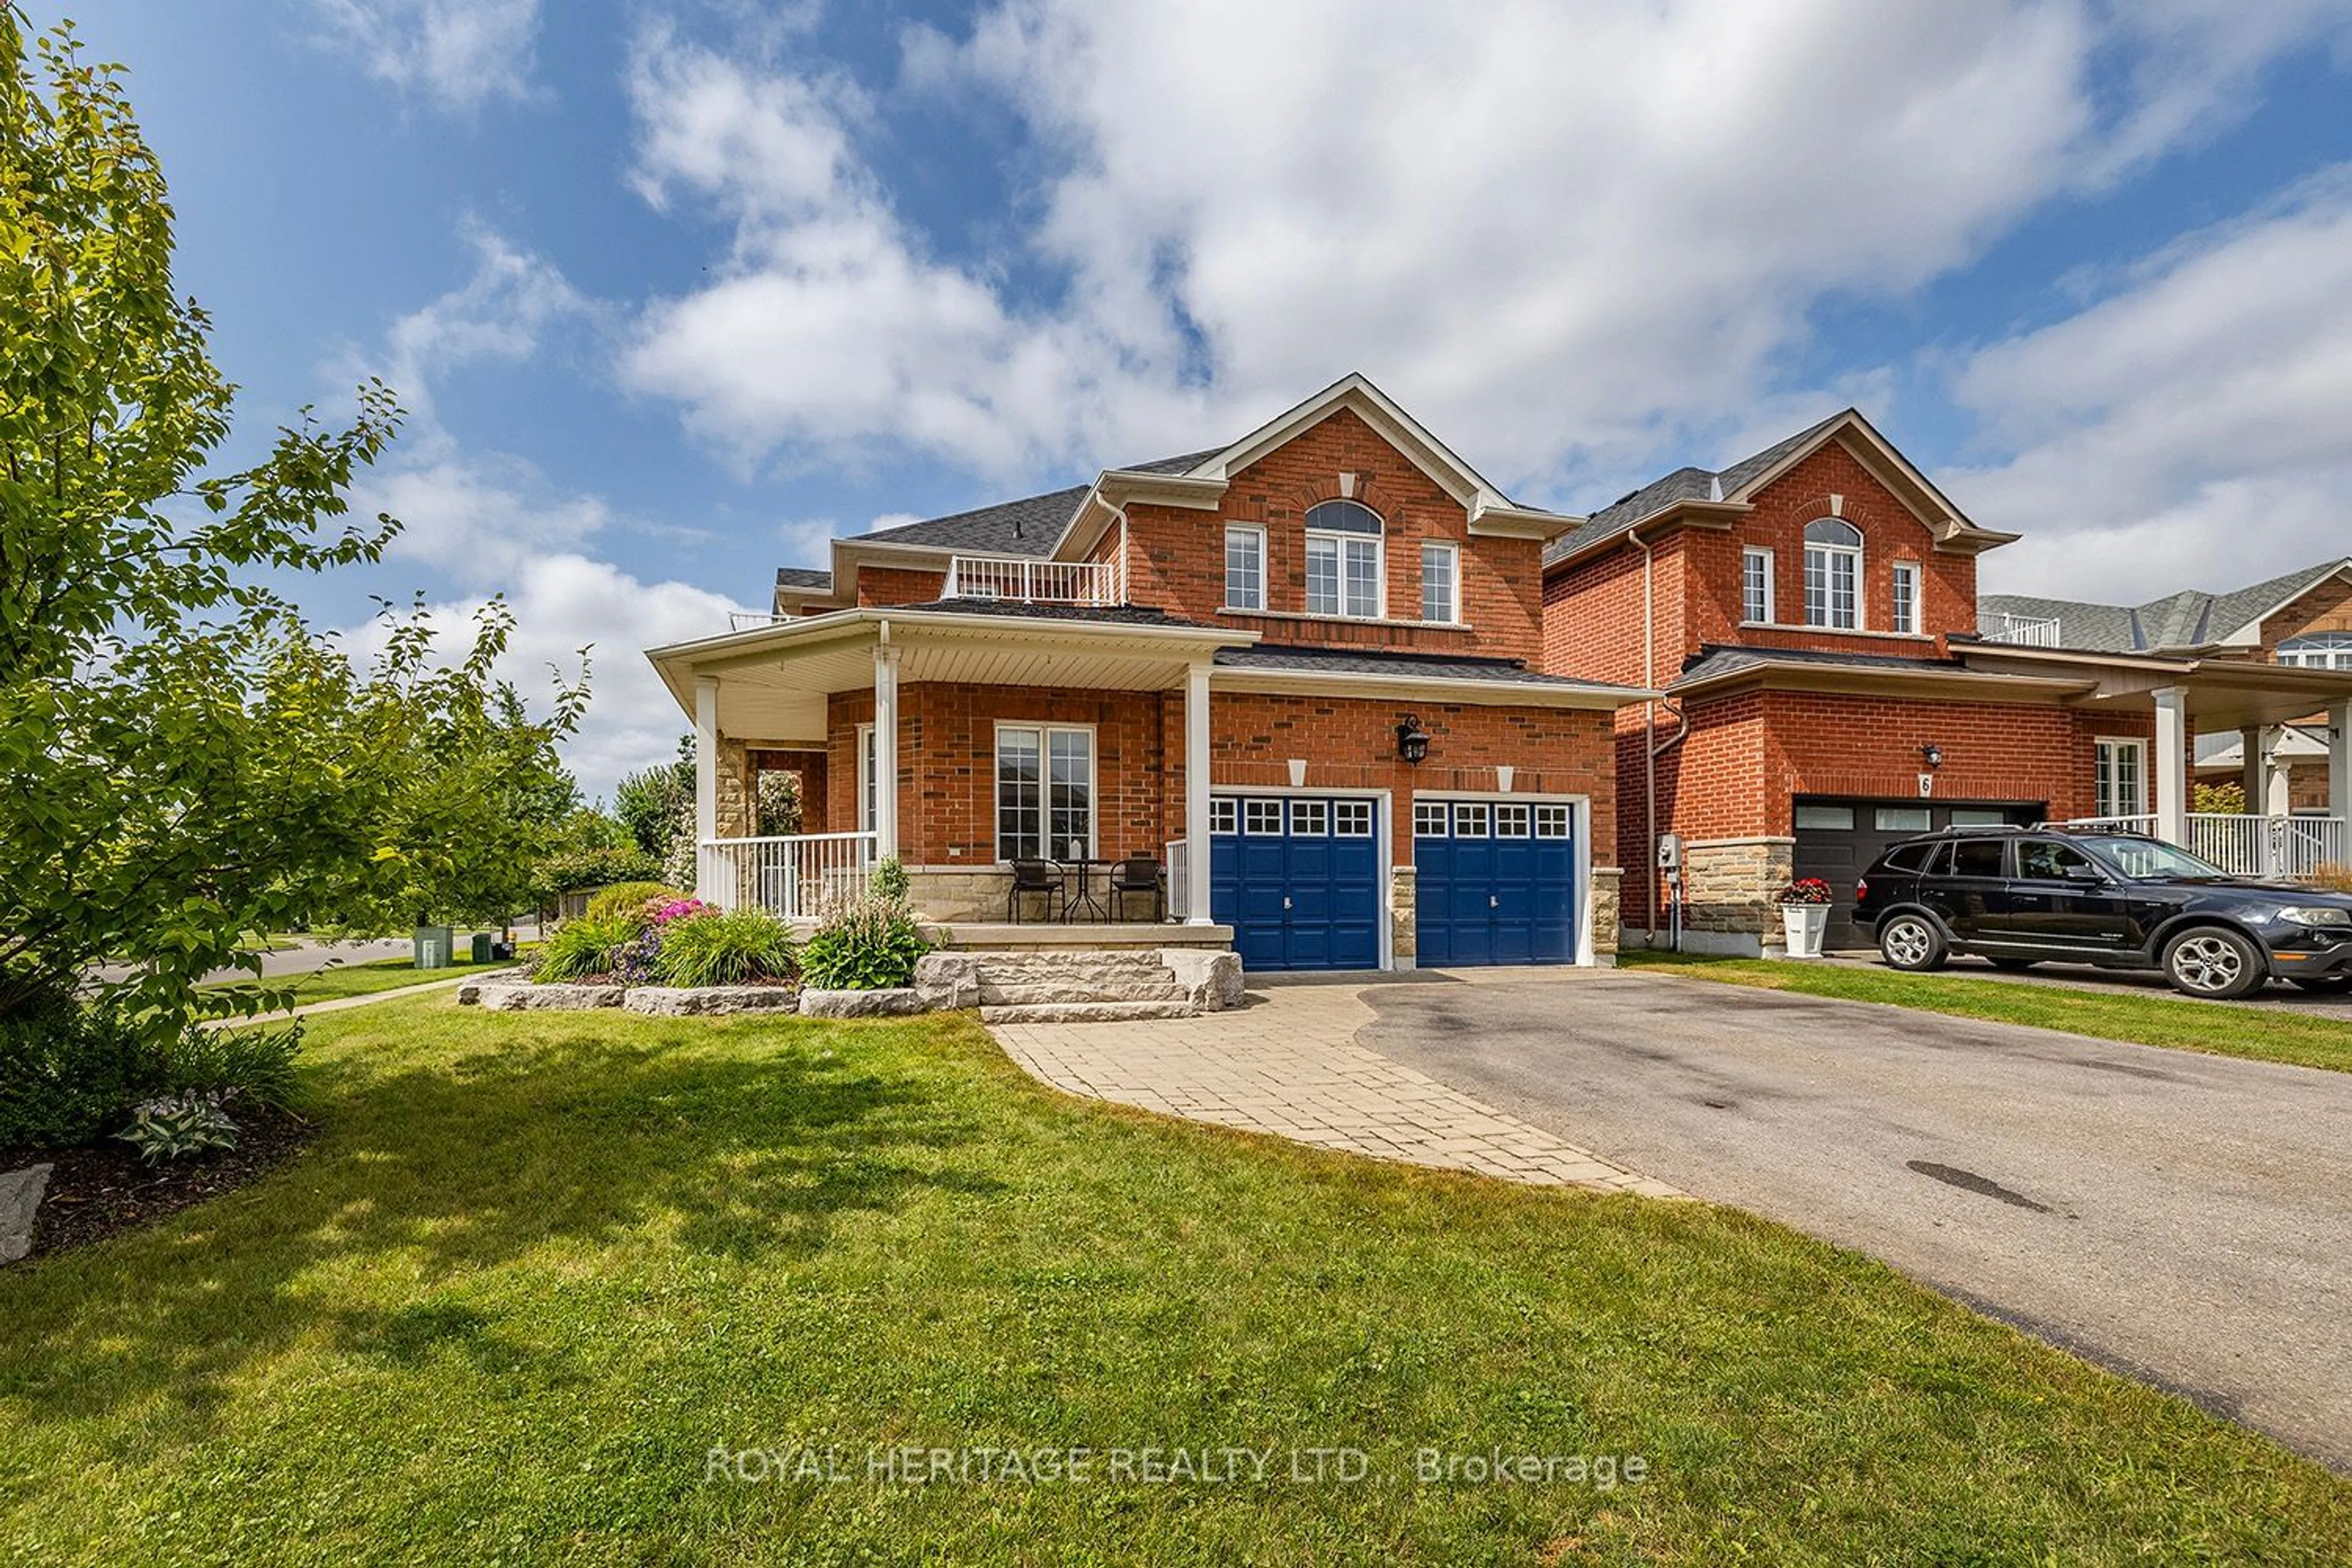 Home with brick exterior material for 78 Meadowglade Rd, Clarington Ontario L1E 3H9